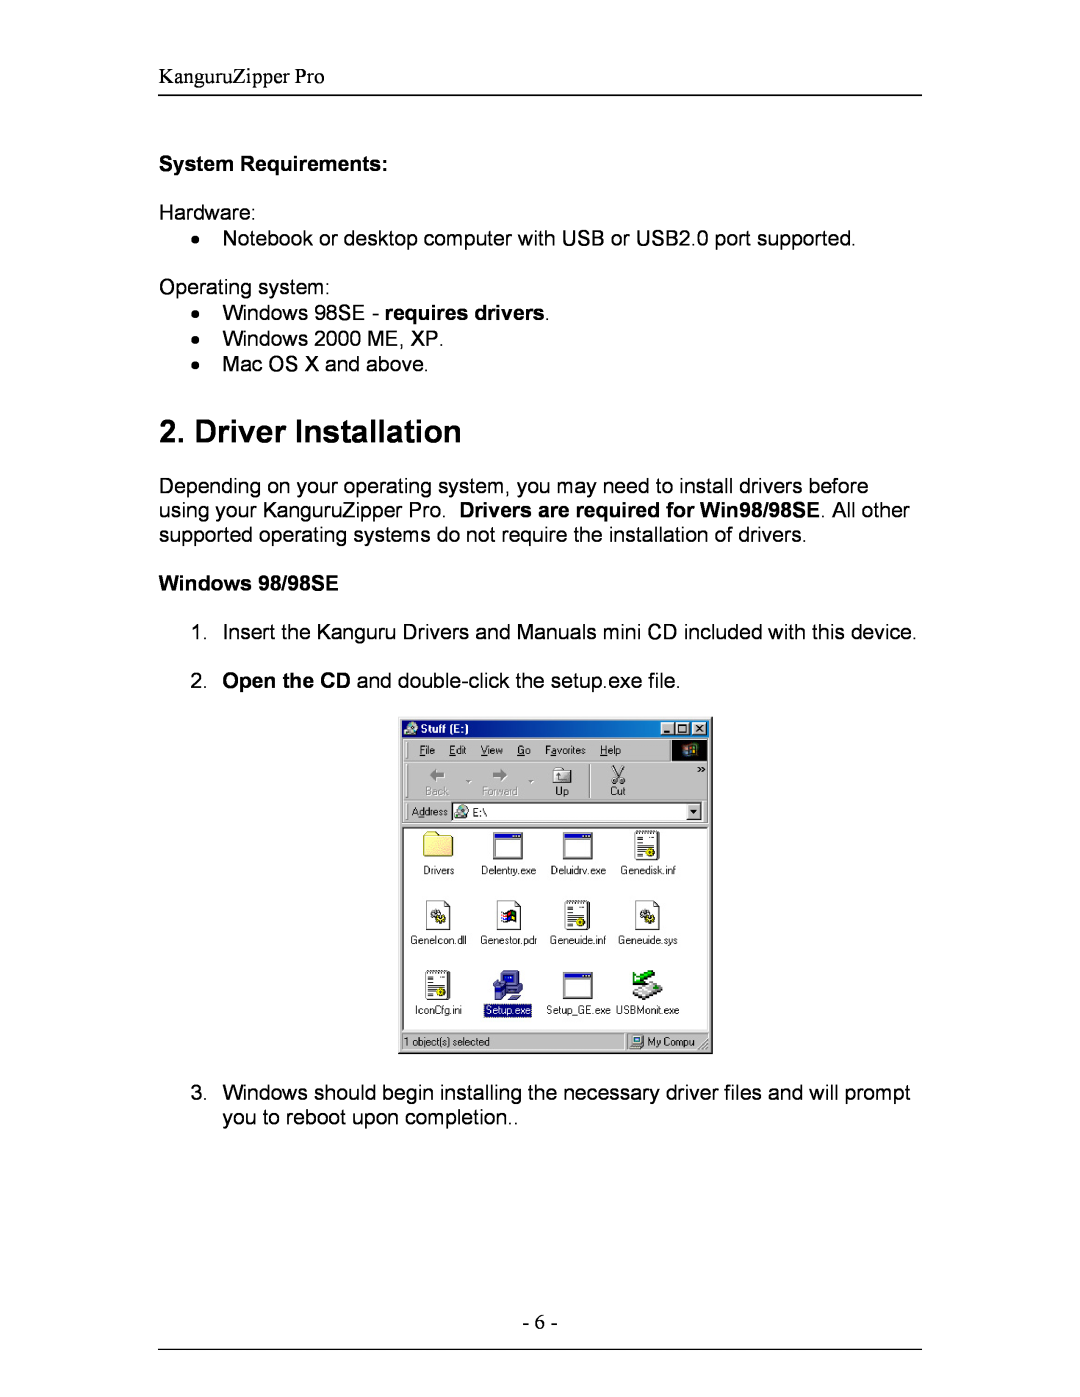 Kanguru Solutions Pro manual System Requirements, Windows 98/98SE, Driver Installation 